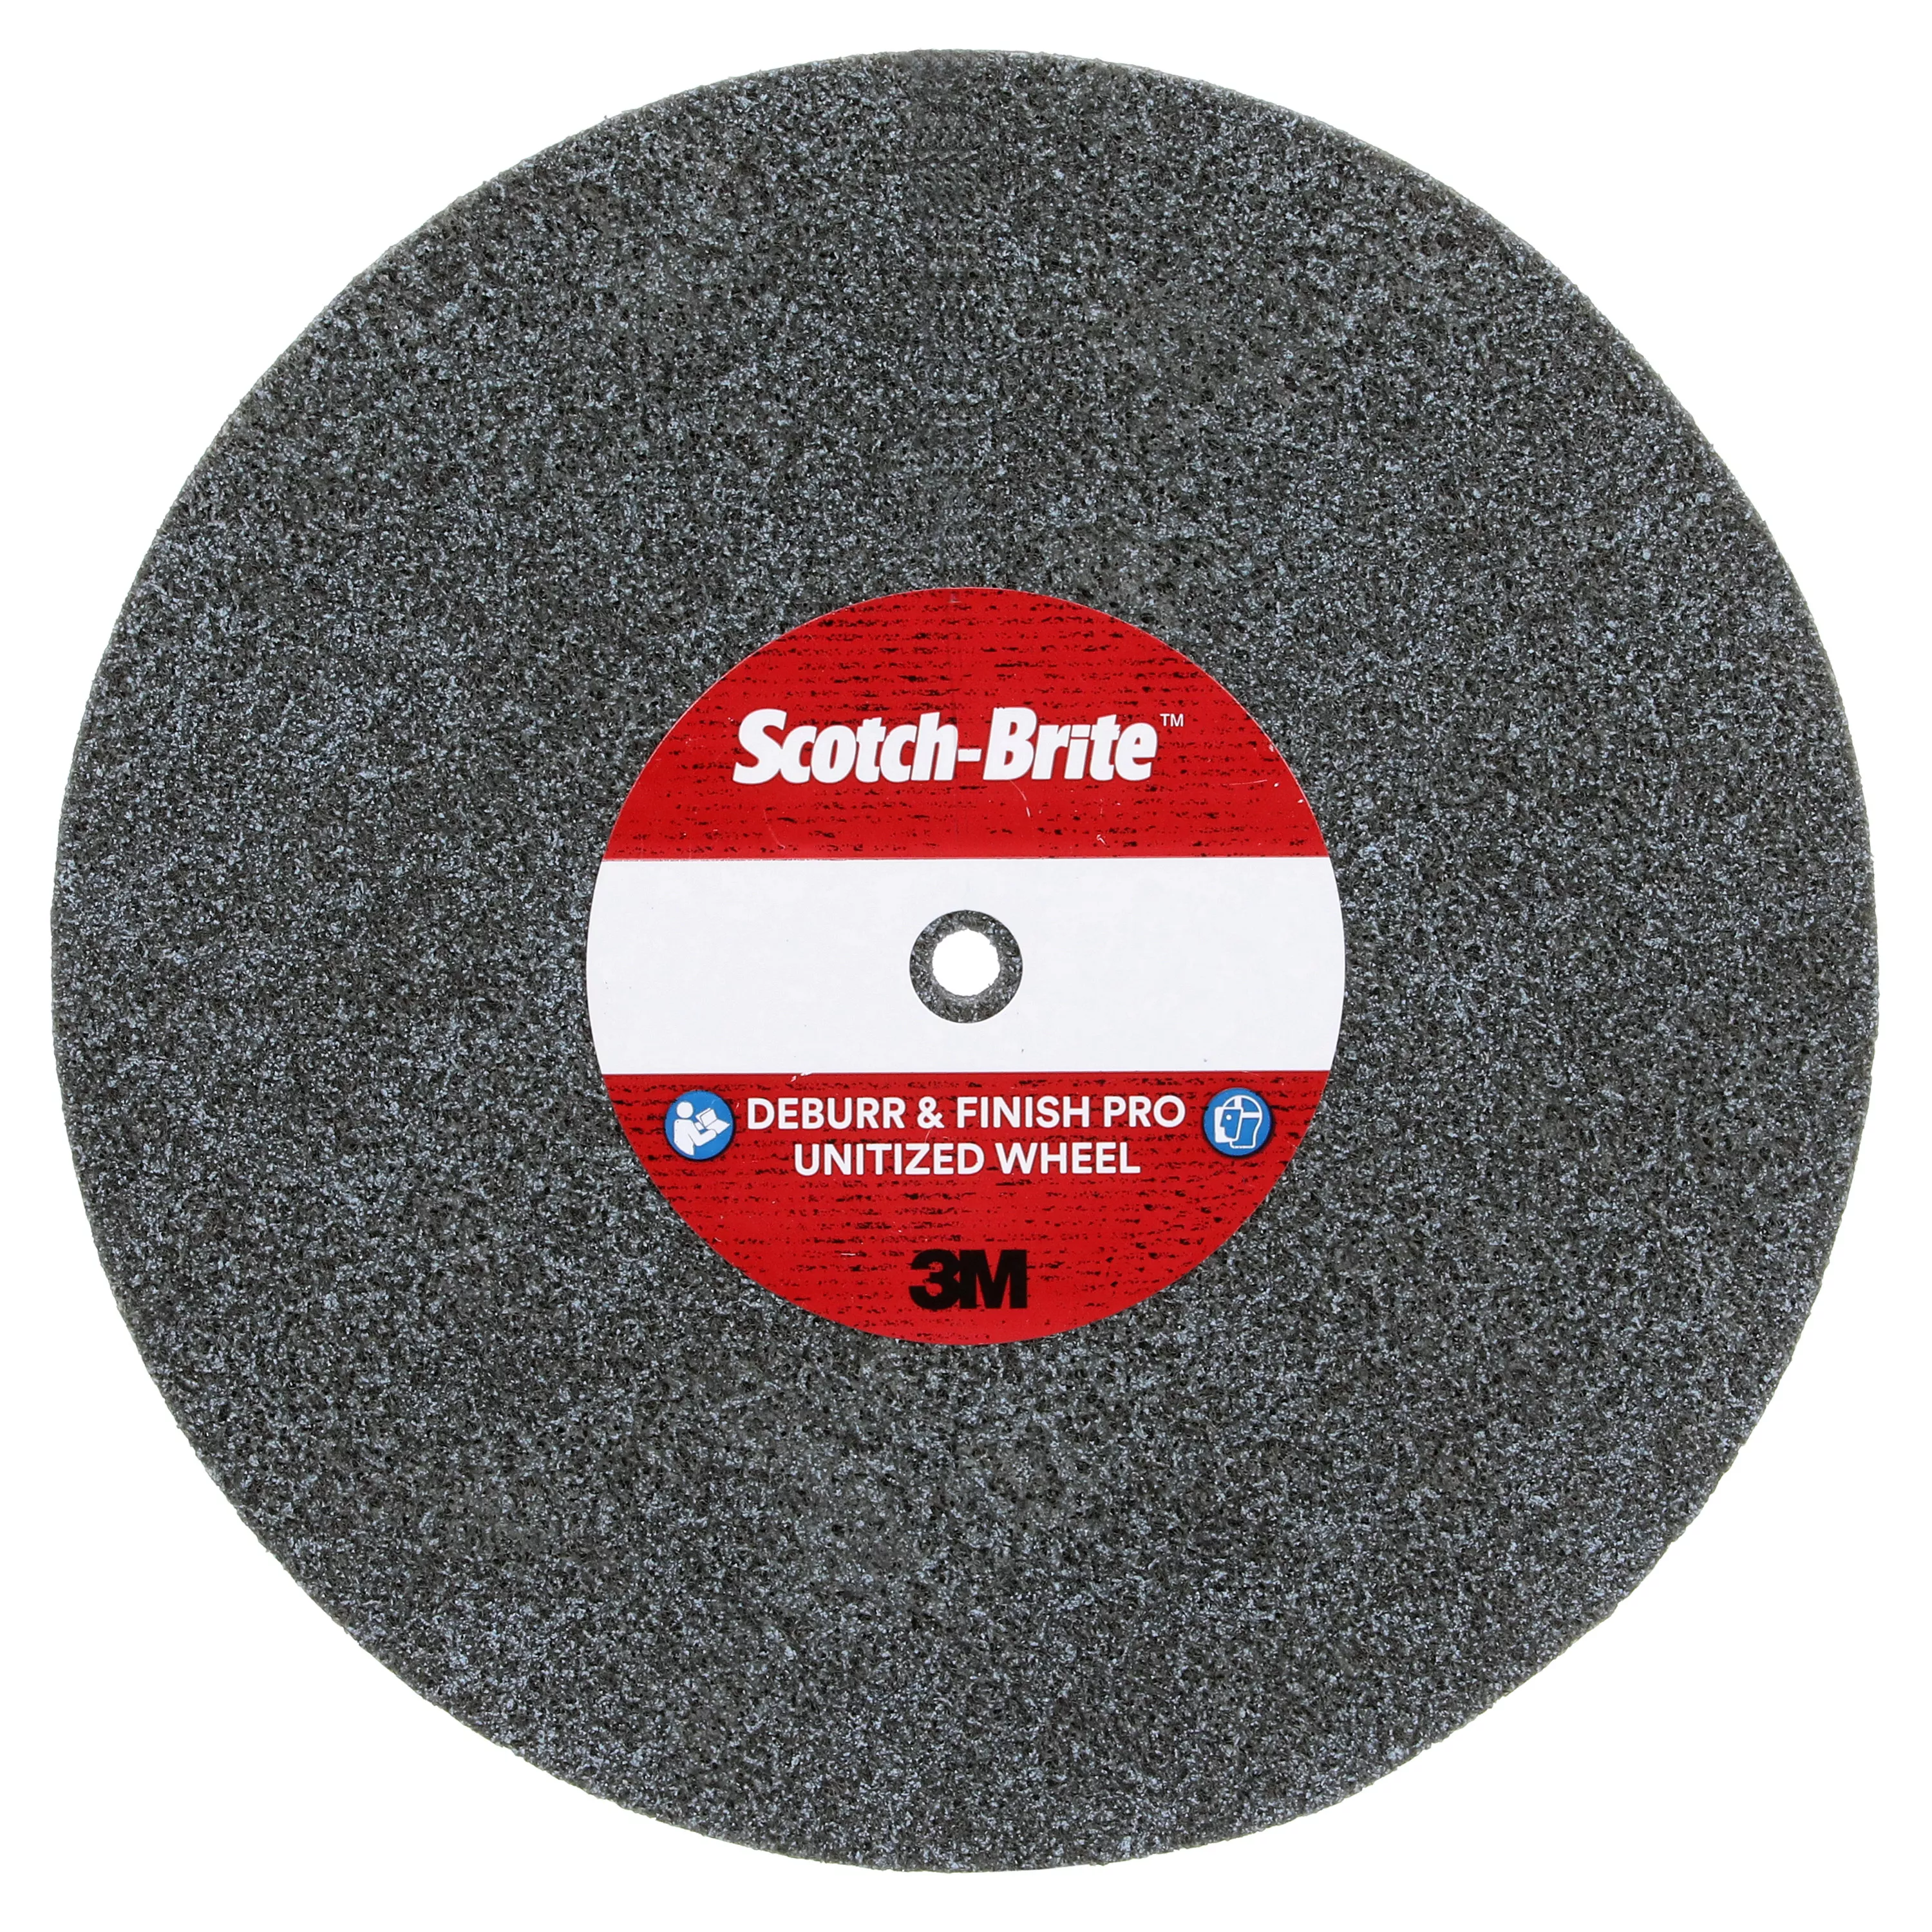 SKU 7100088614 | Scotch-Brite™ Deburr & Finish Pro Unitized Wheel